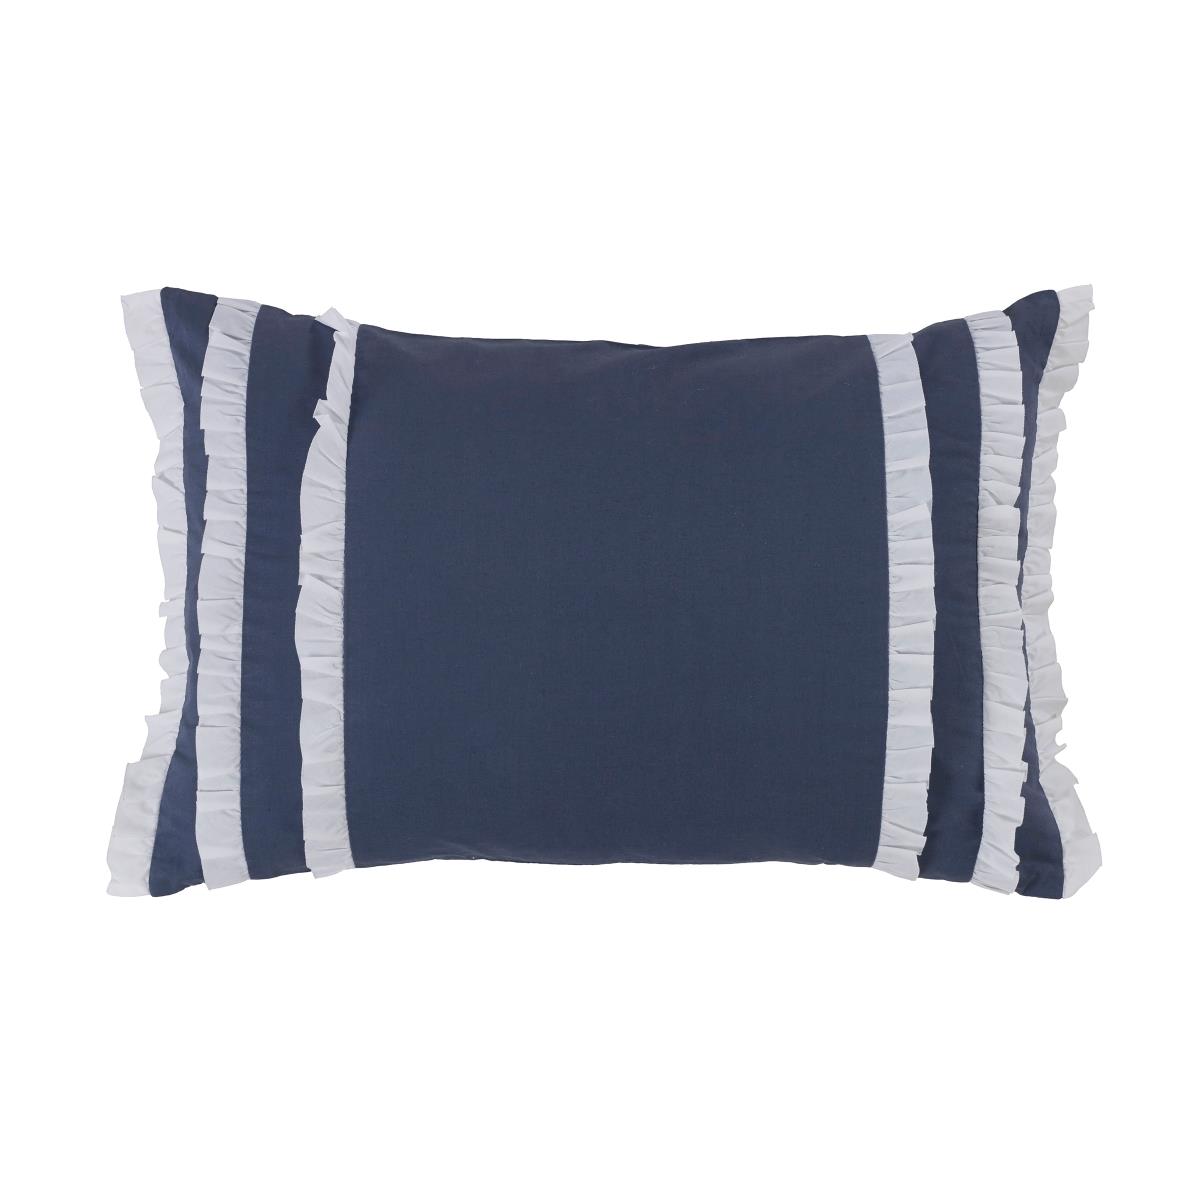 Y00306 Decorative Pillow With Vertical Stripes - Trellis Blue